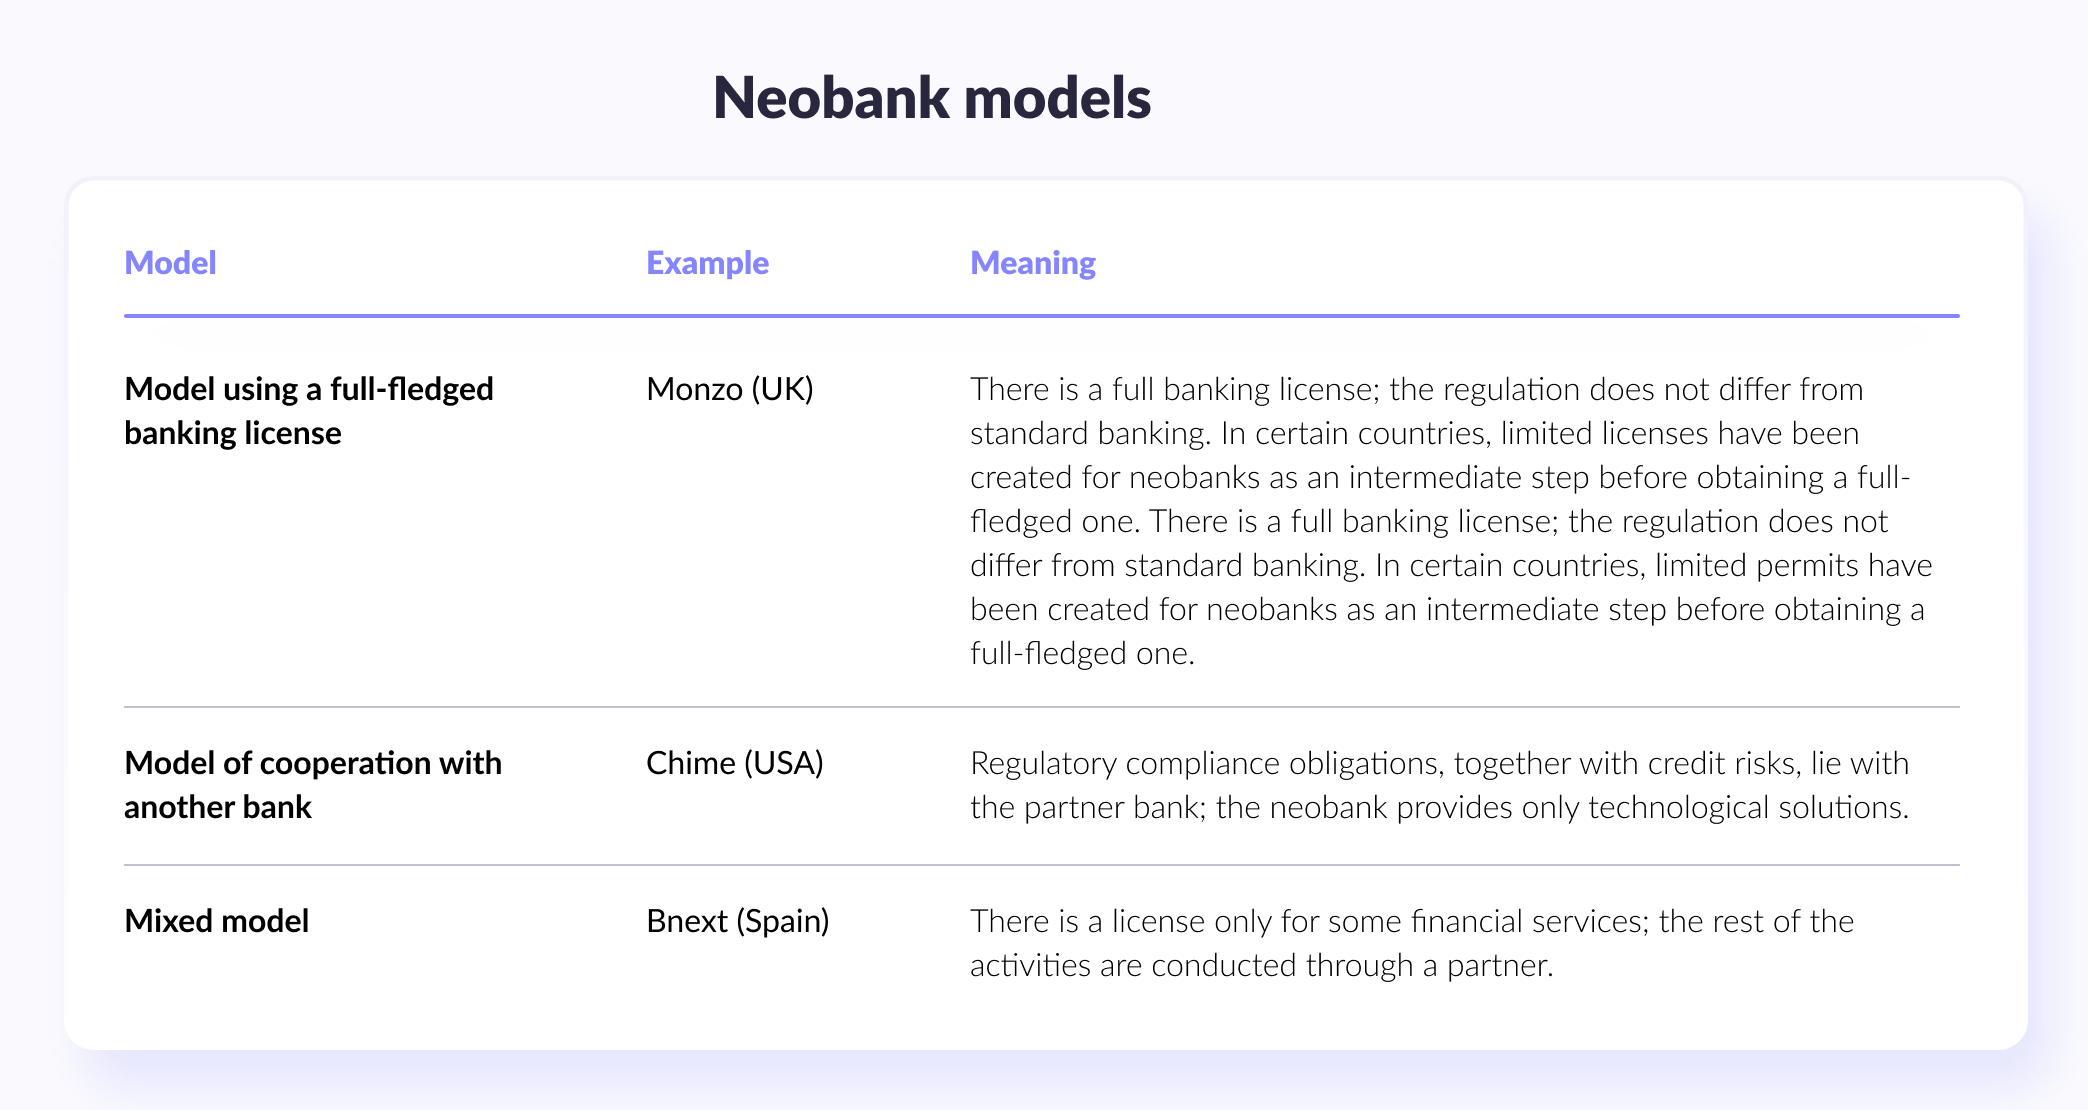 Neobank models